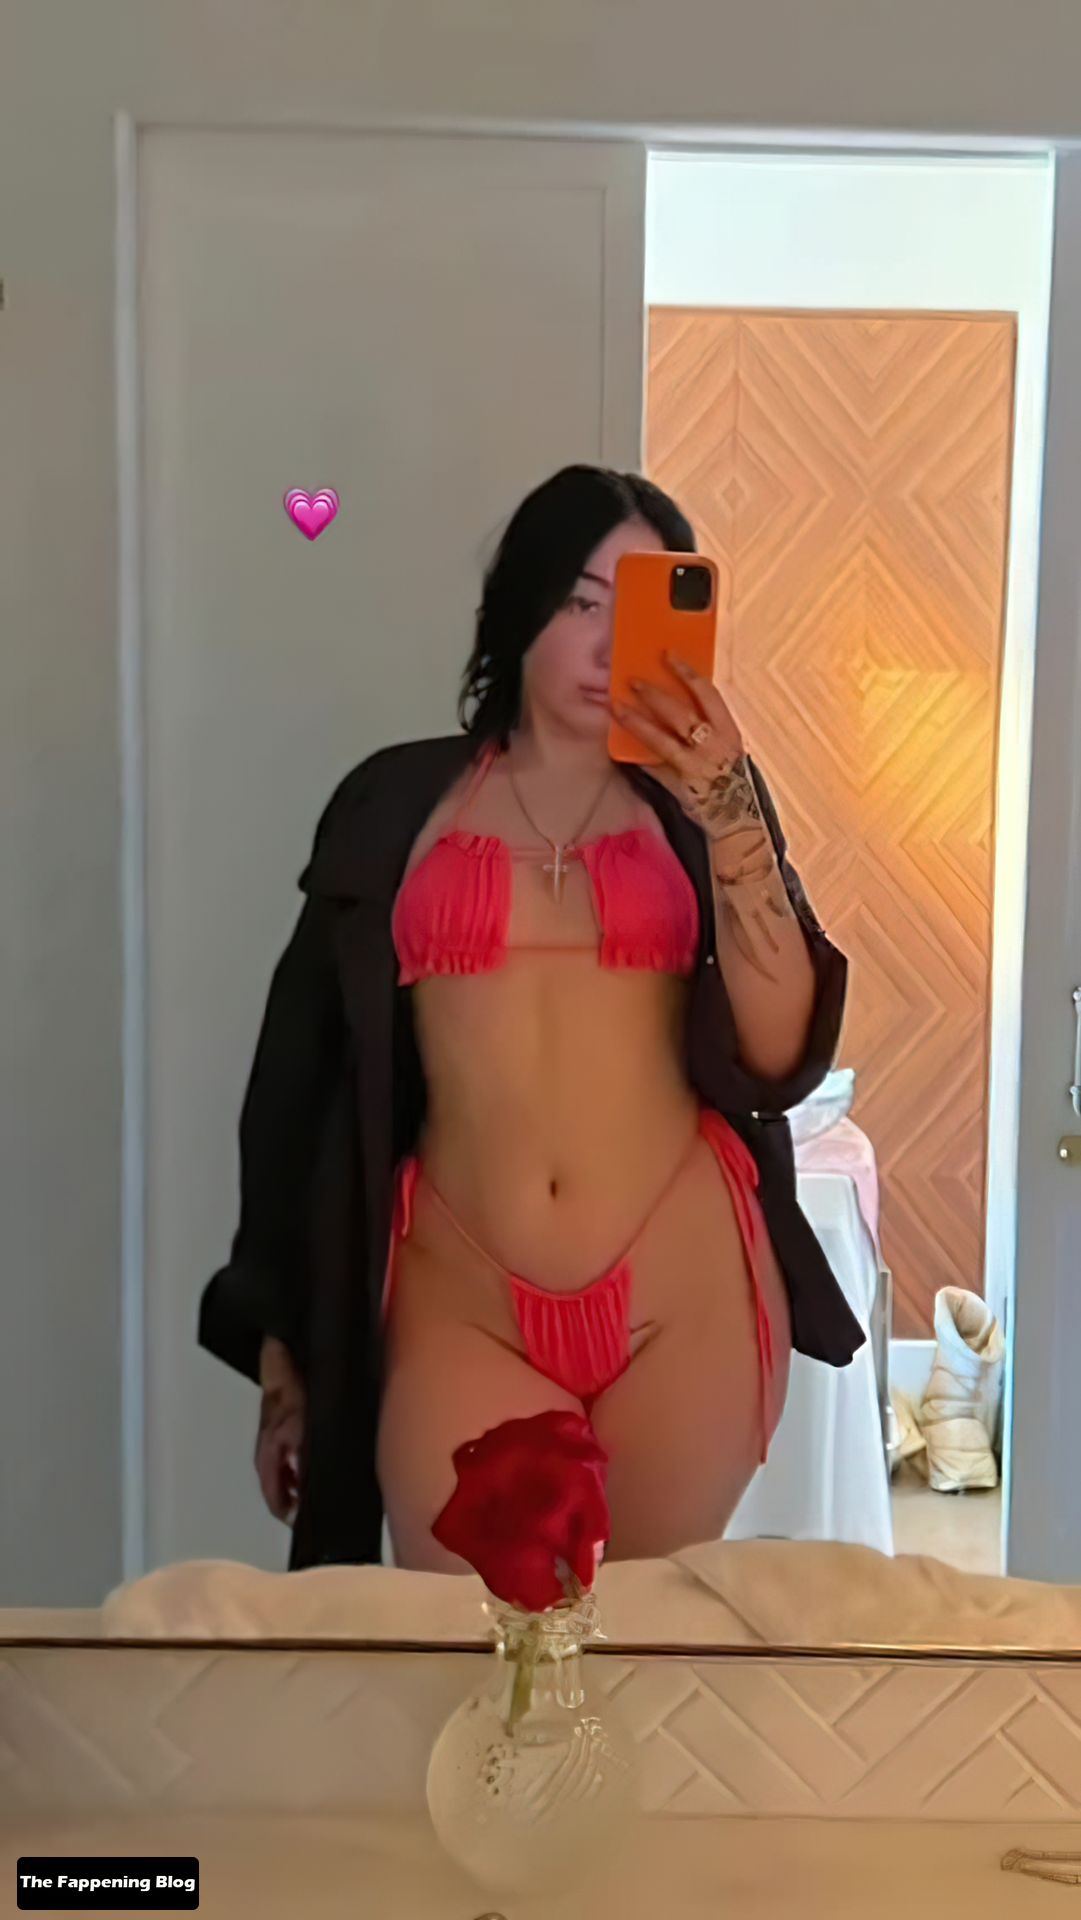 Leaked teen celebrity noah cyrus sexy underwear selfie photos